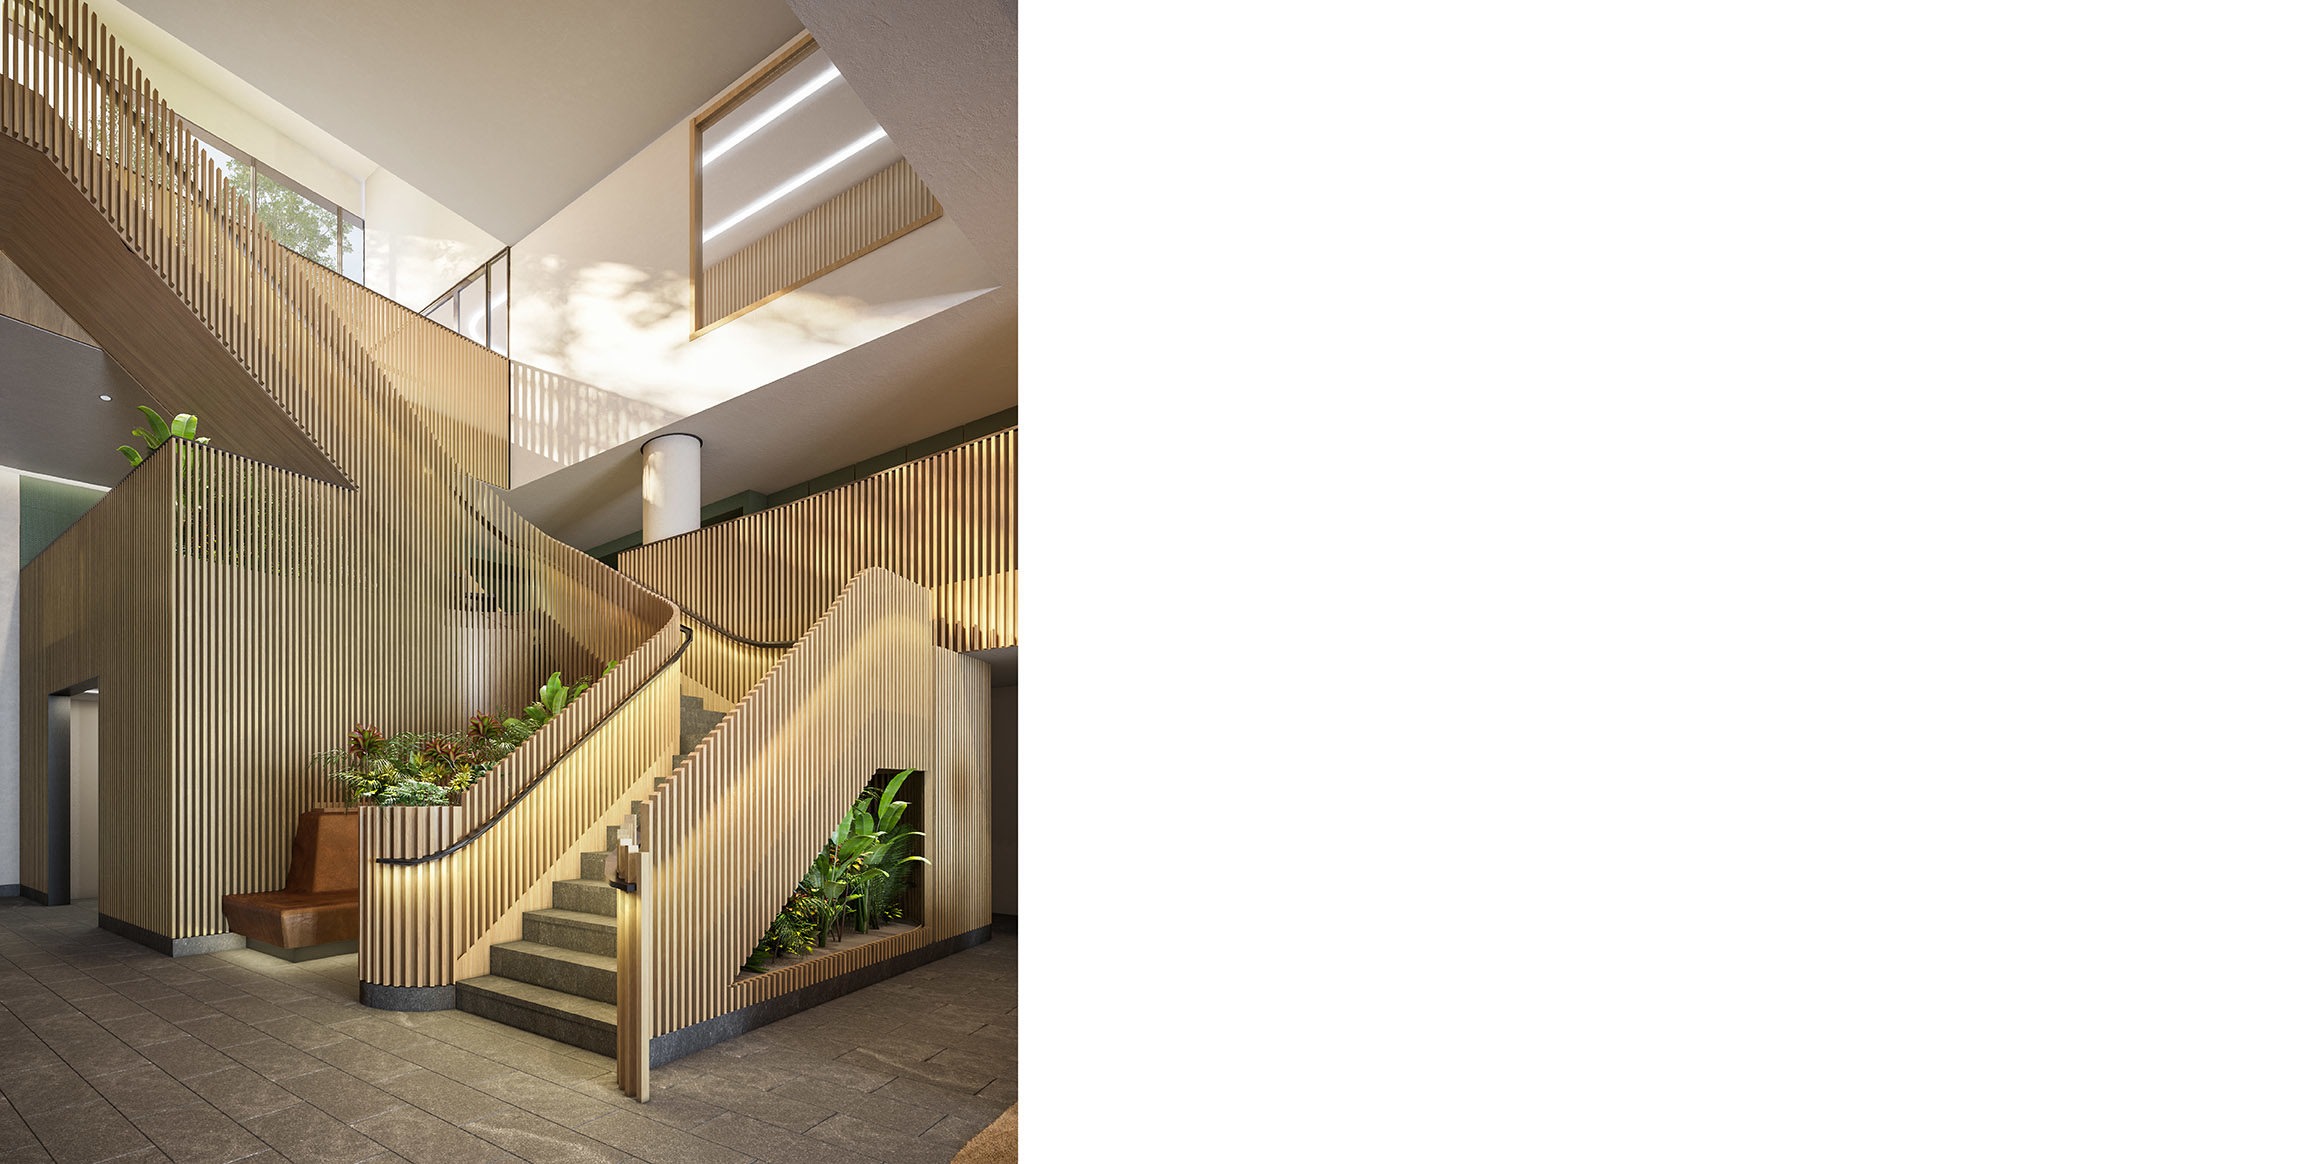 Stair risint to second floor amenities